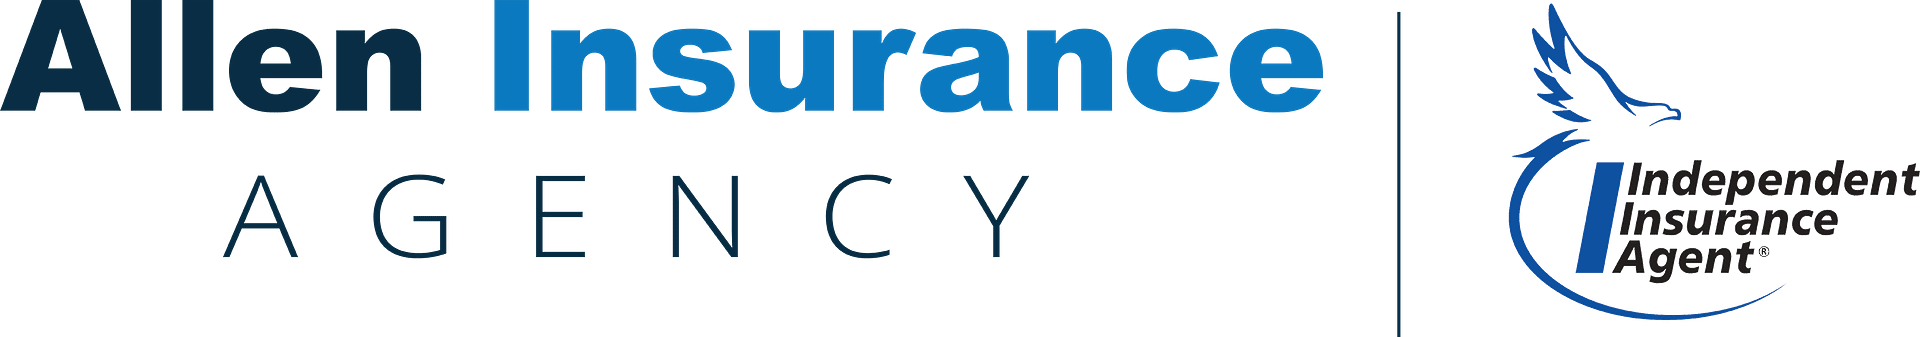 allen insurance logo